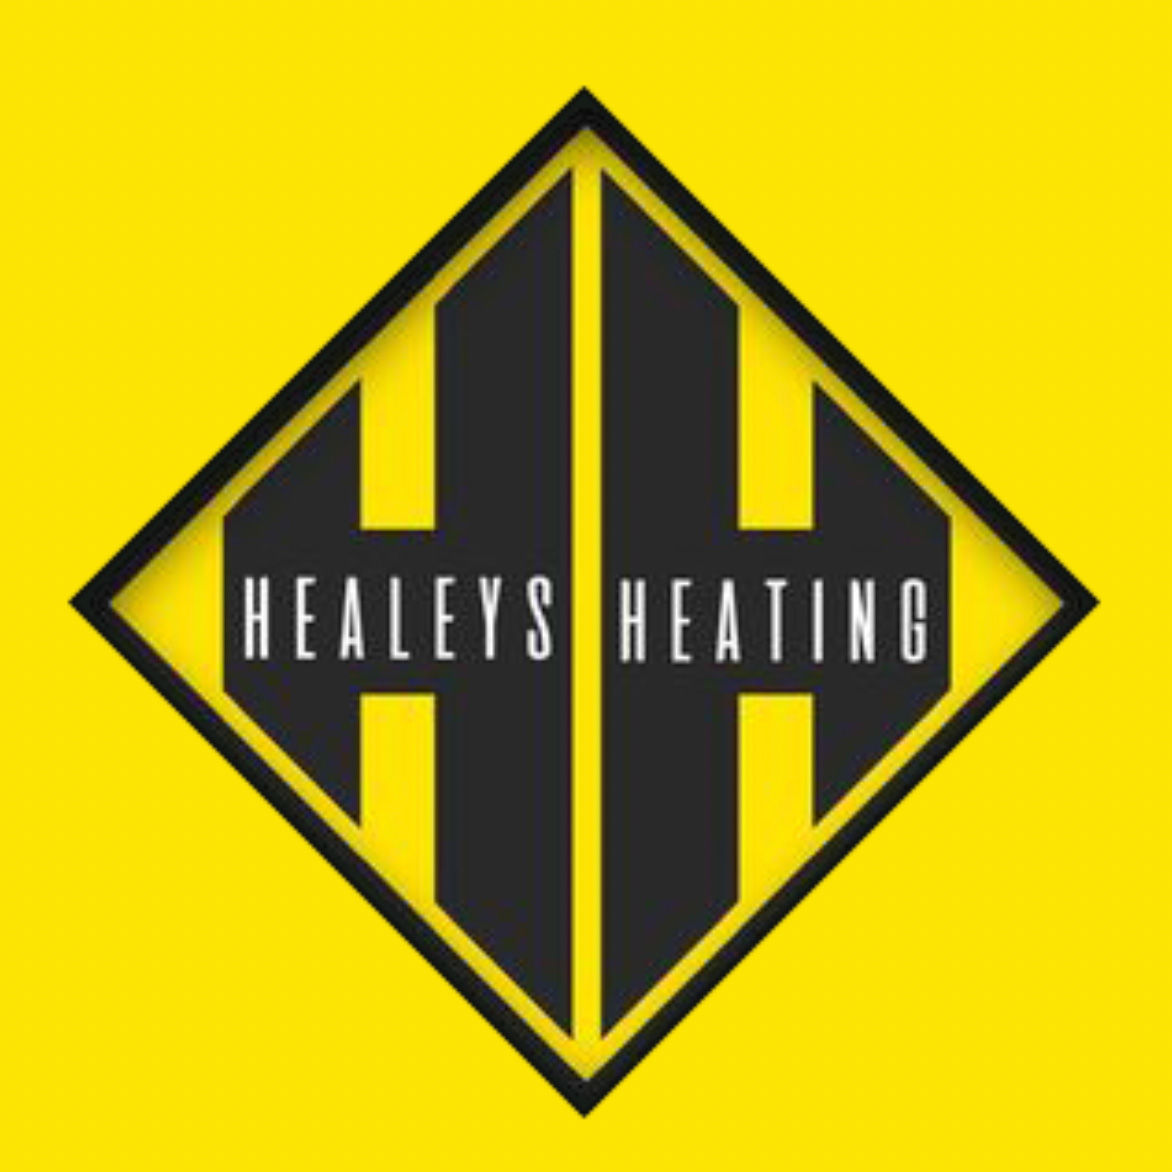 Healeys heating logo